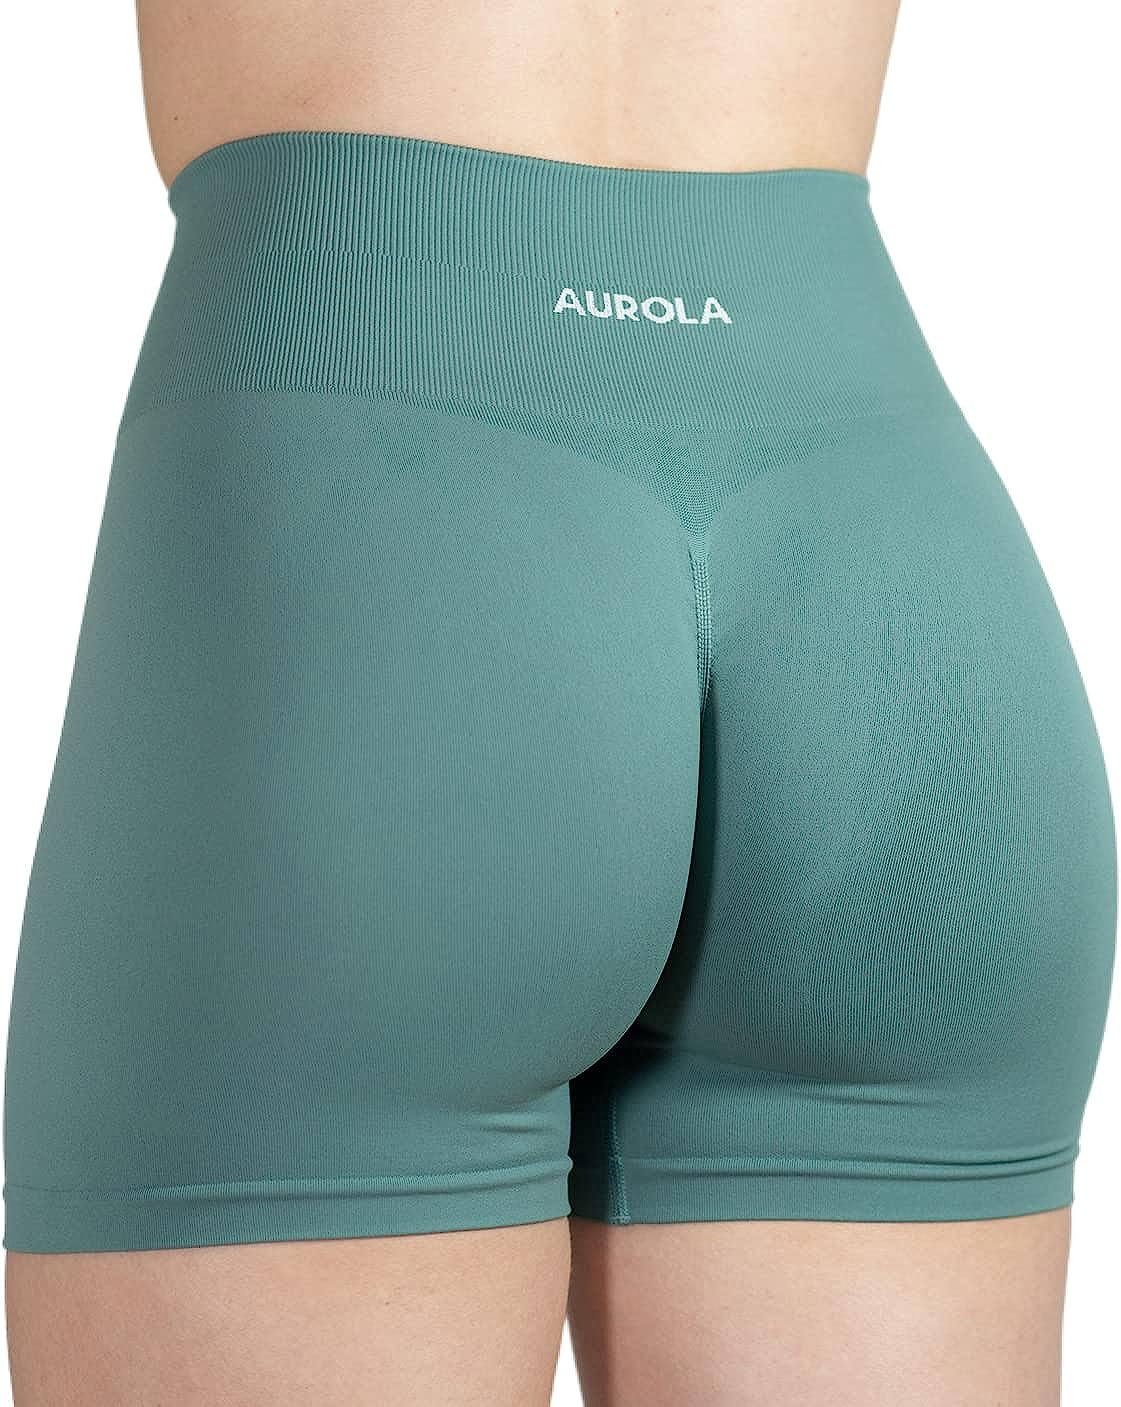 AUROLA Dream Collection Workout Shorts for Women Scrunch